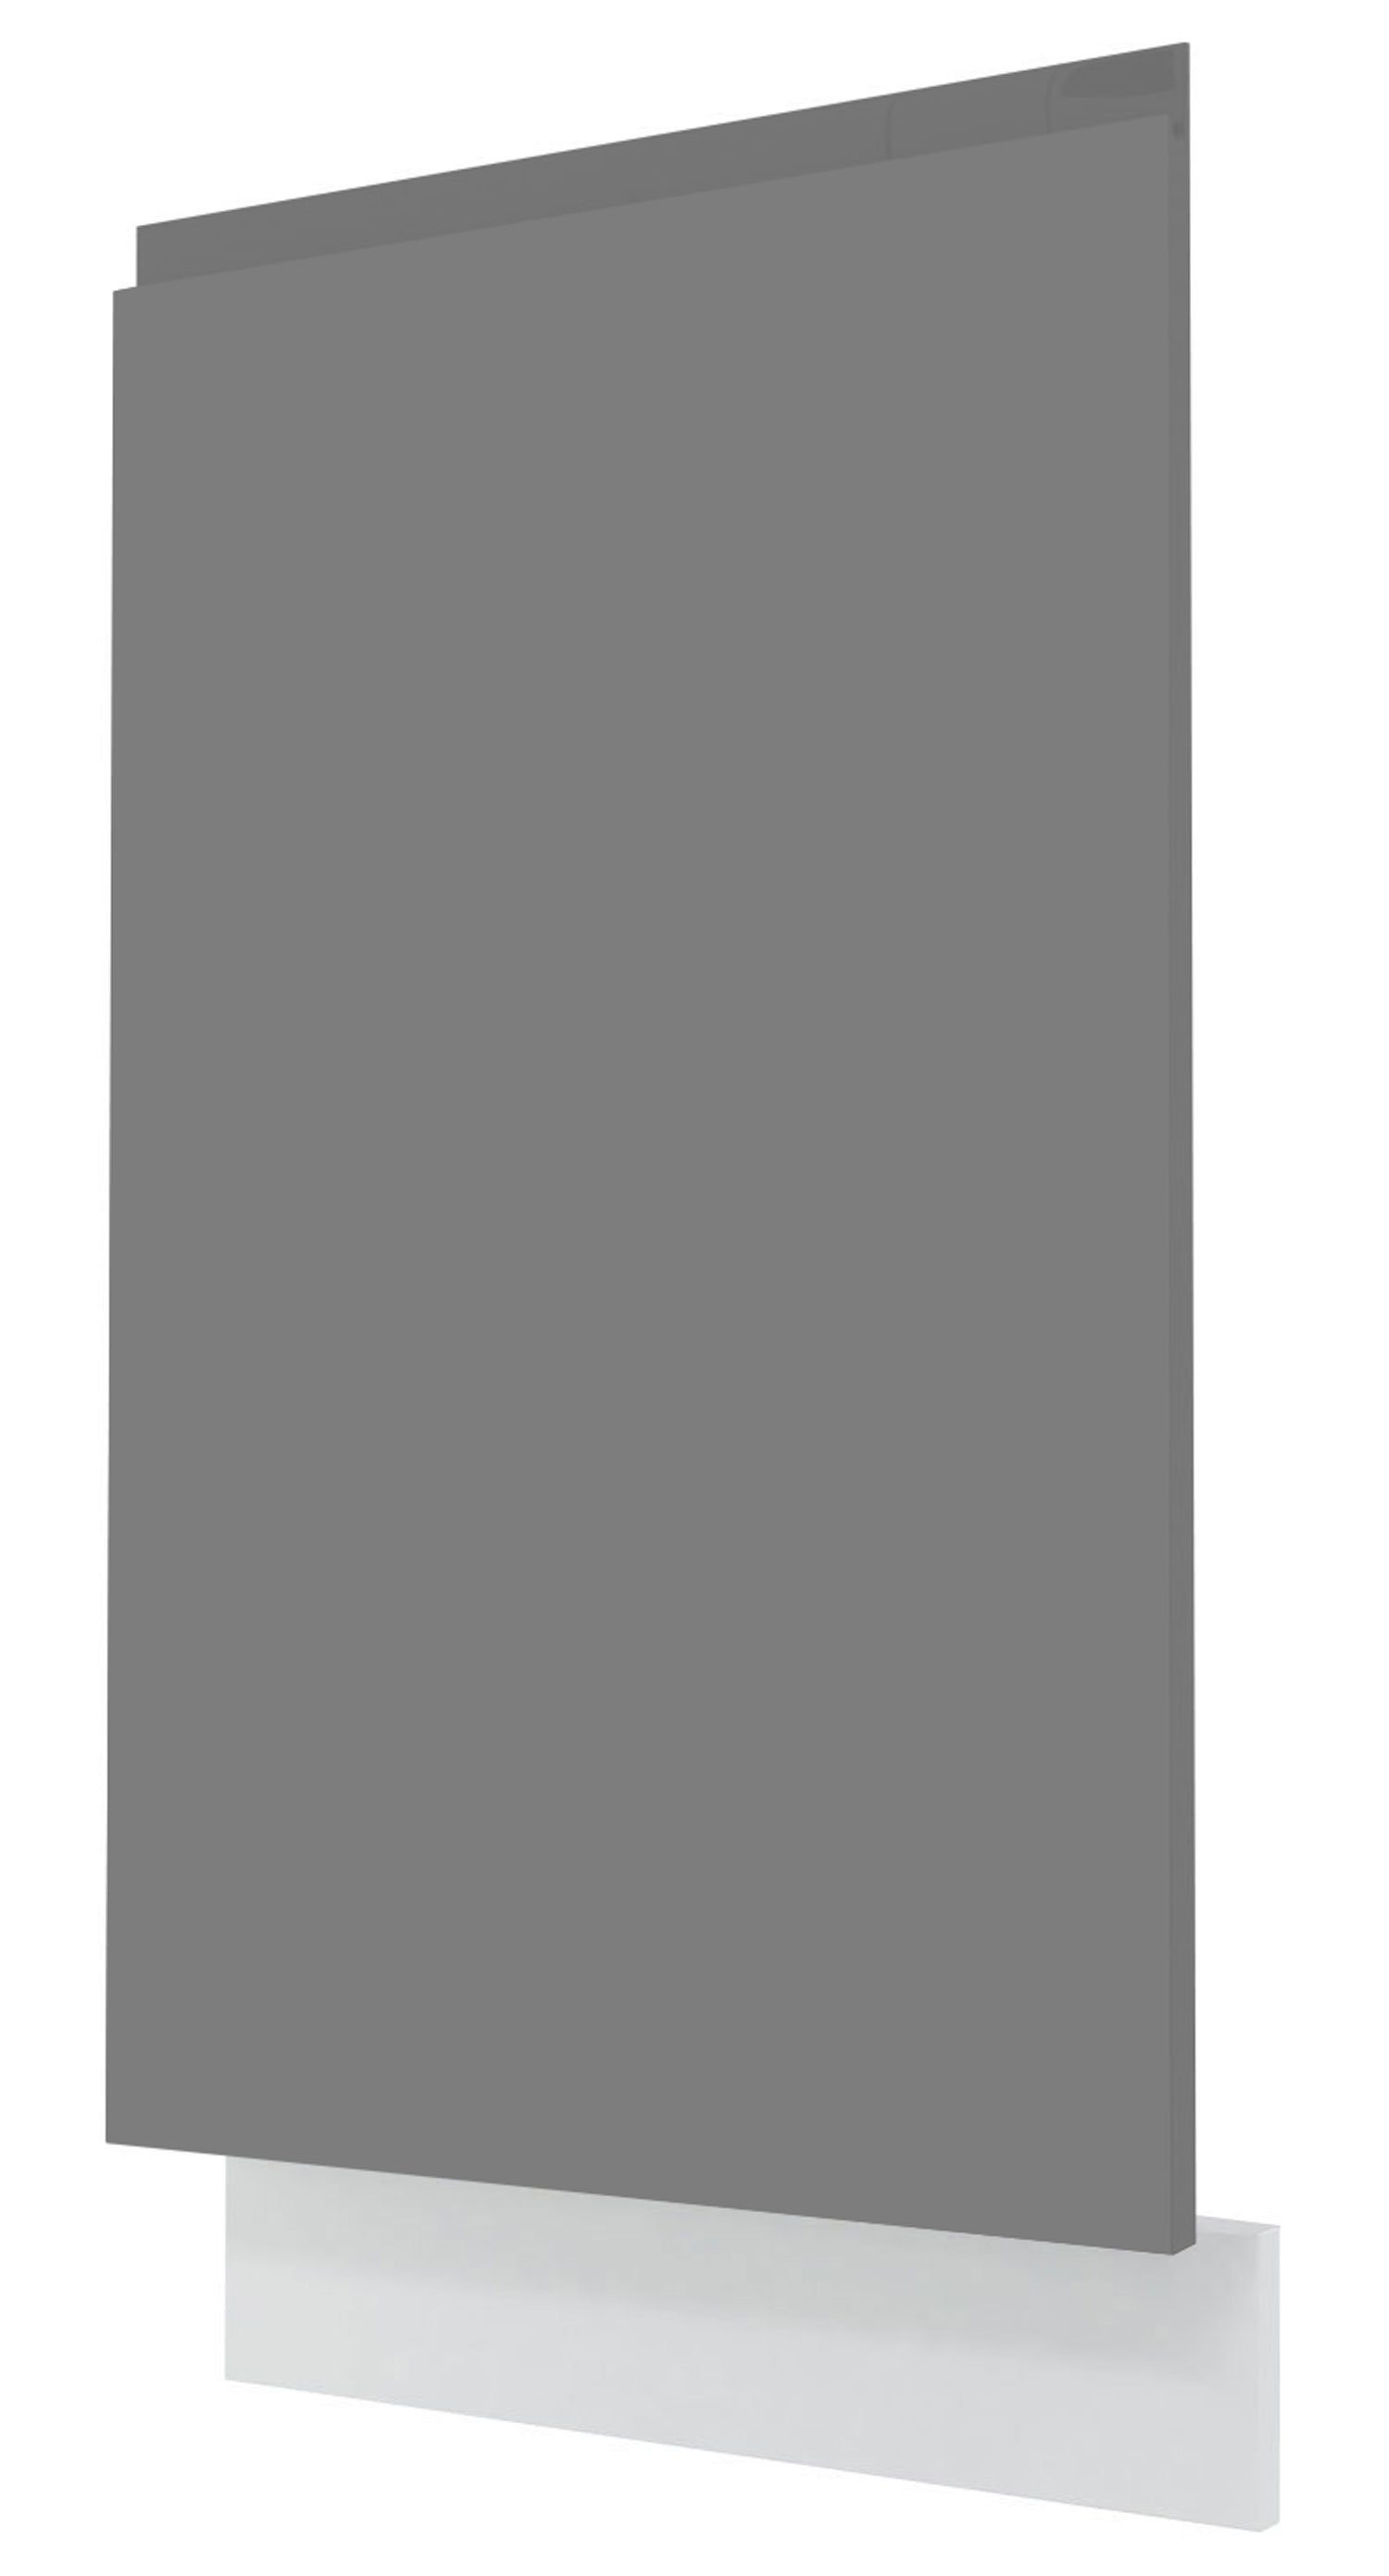 Feldmann-Wohnen Sockelblende grey Sockelfarbe Front- matt vollintegriert Avellino, wählbar dust Acryl grifflos und 45cm